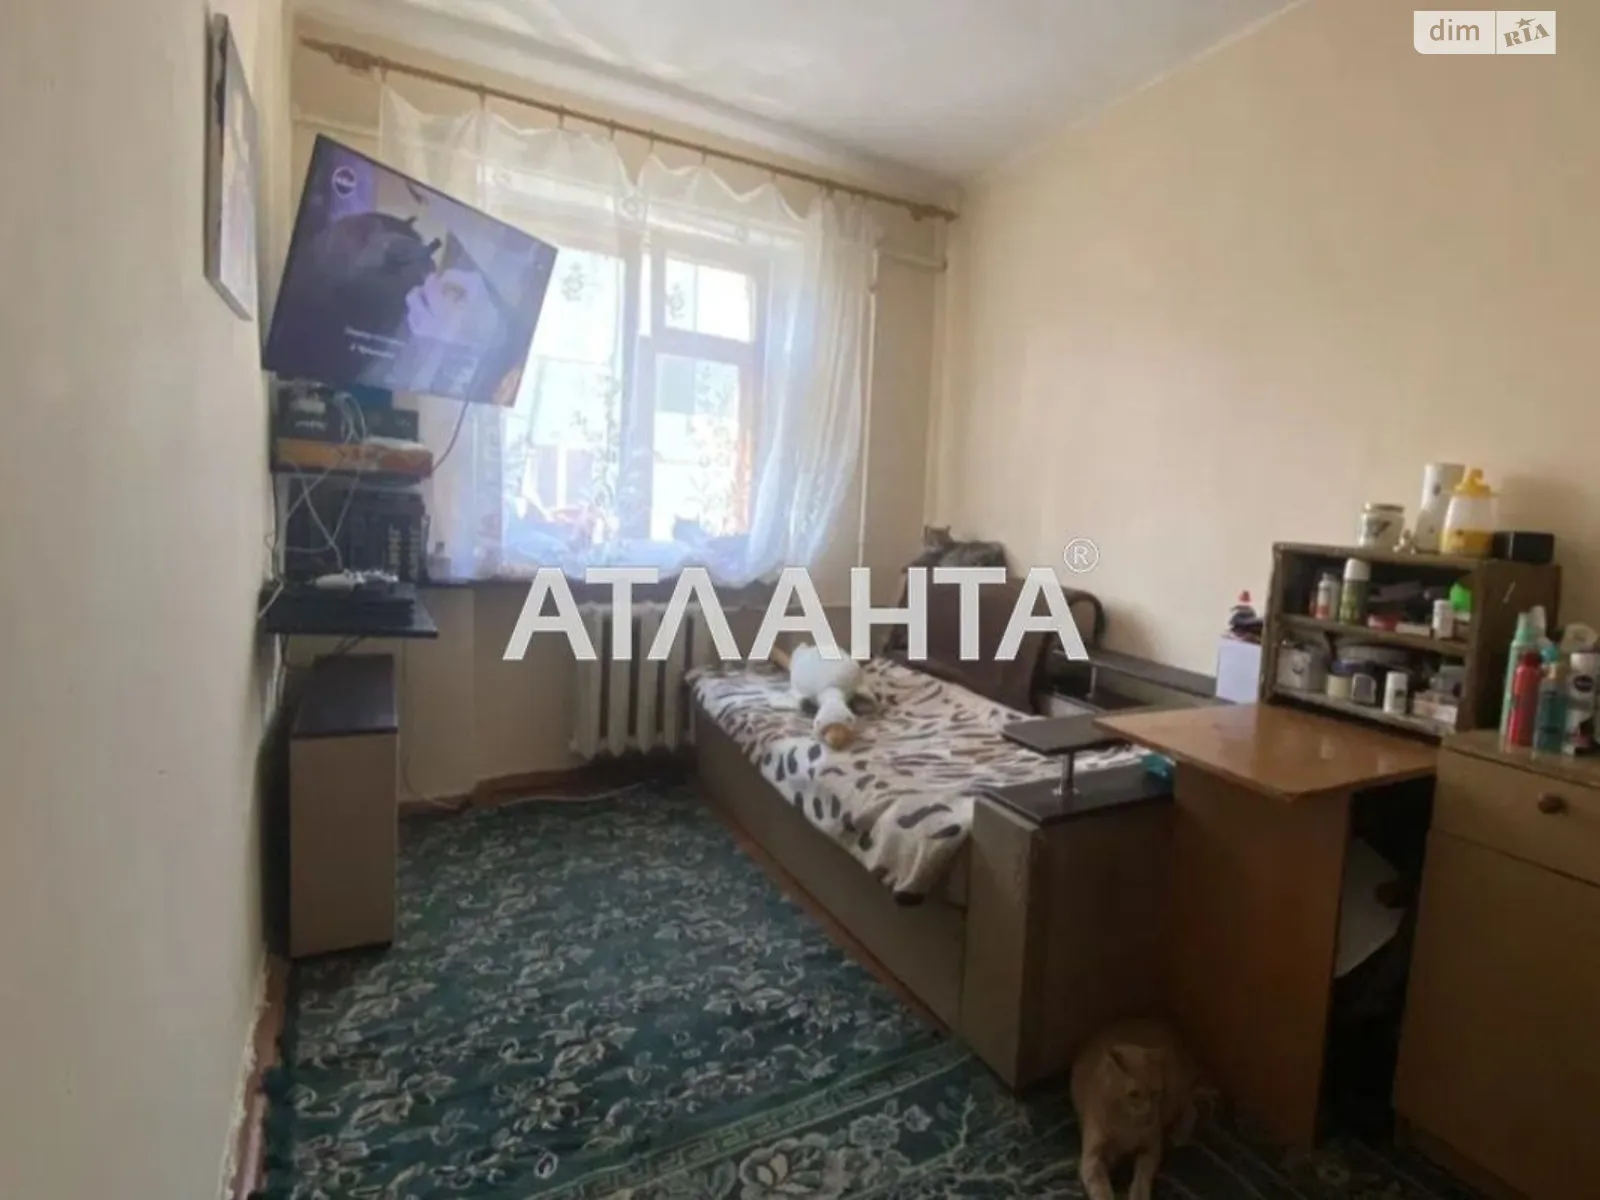 Продается комната 13 кв. м в Одессе, цена: 8000 $ - фото 1